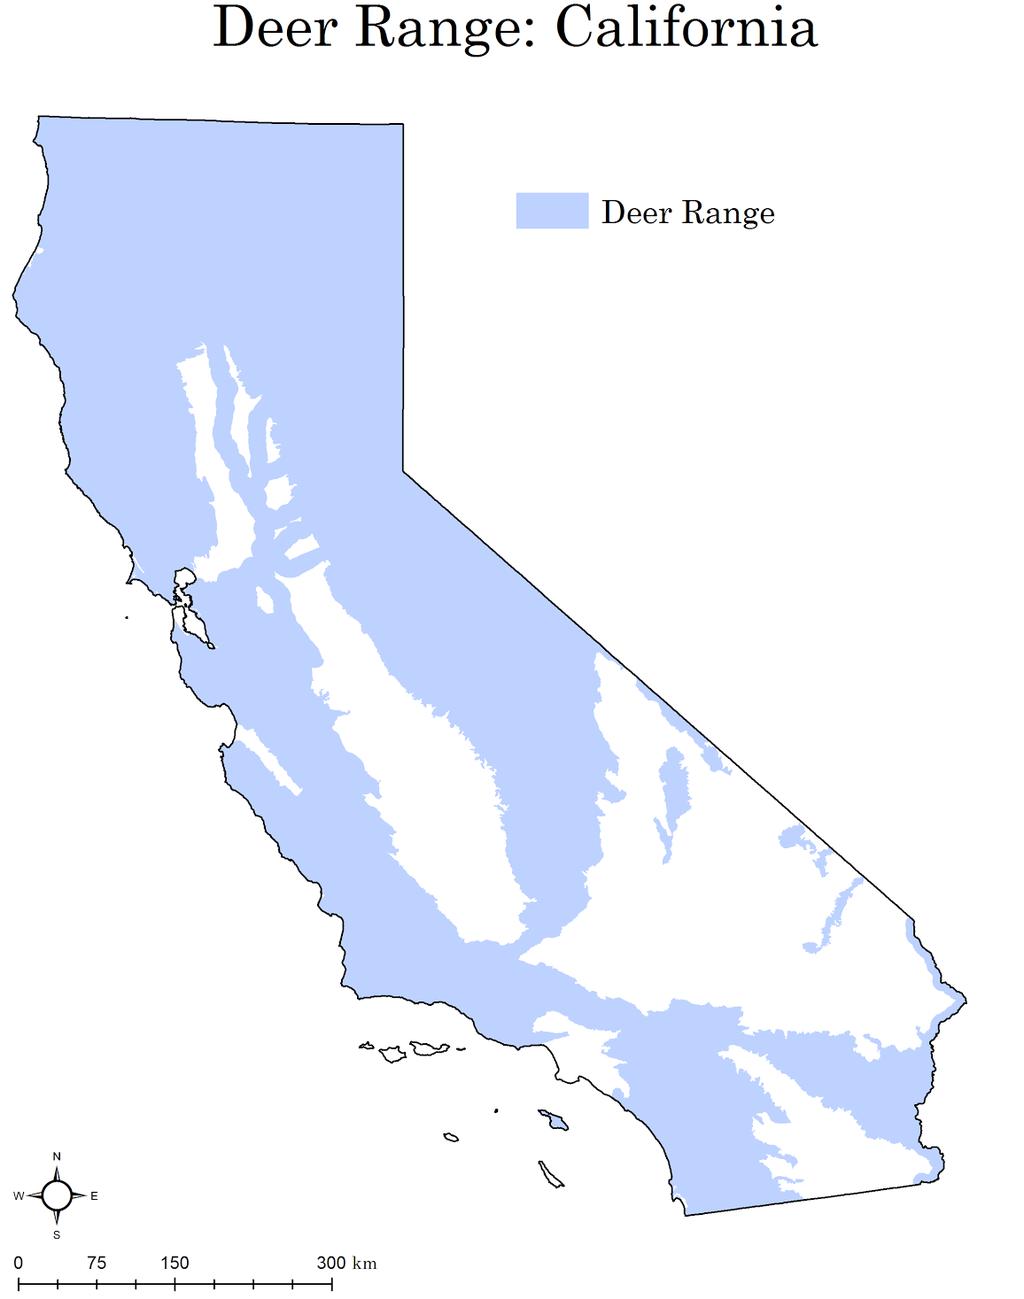 Figure C.6. Deer Range for California.